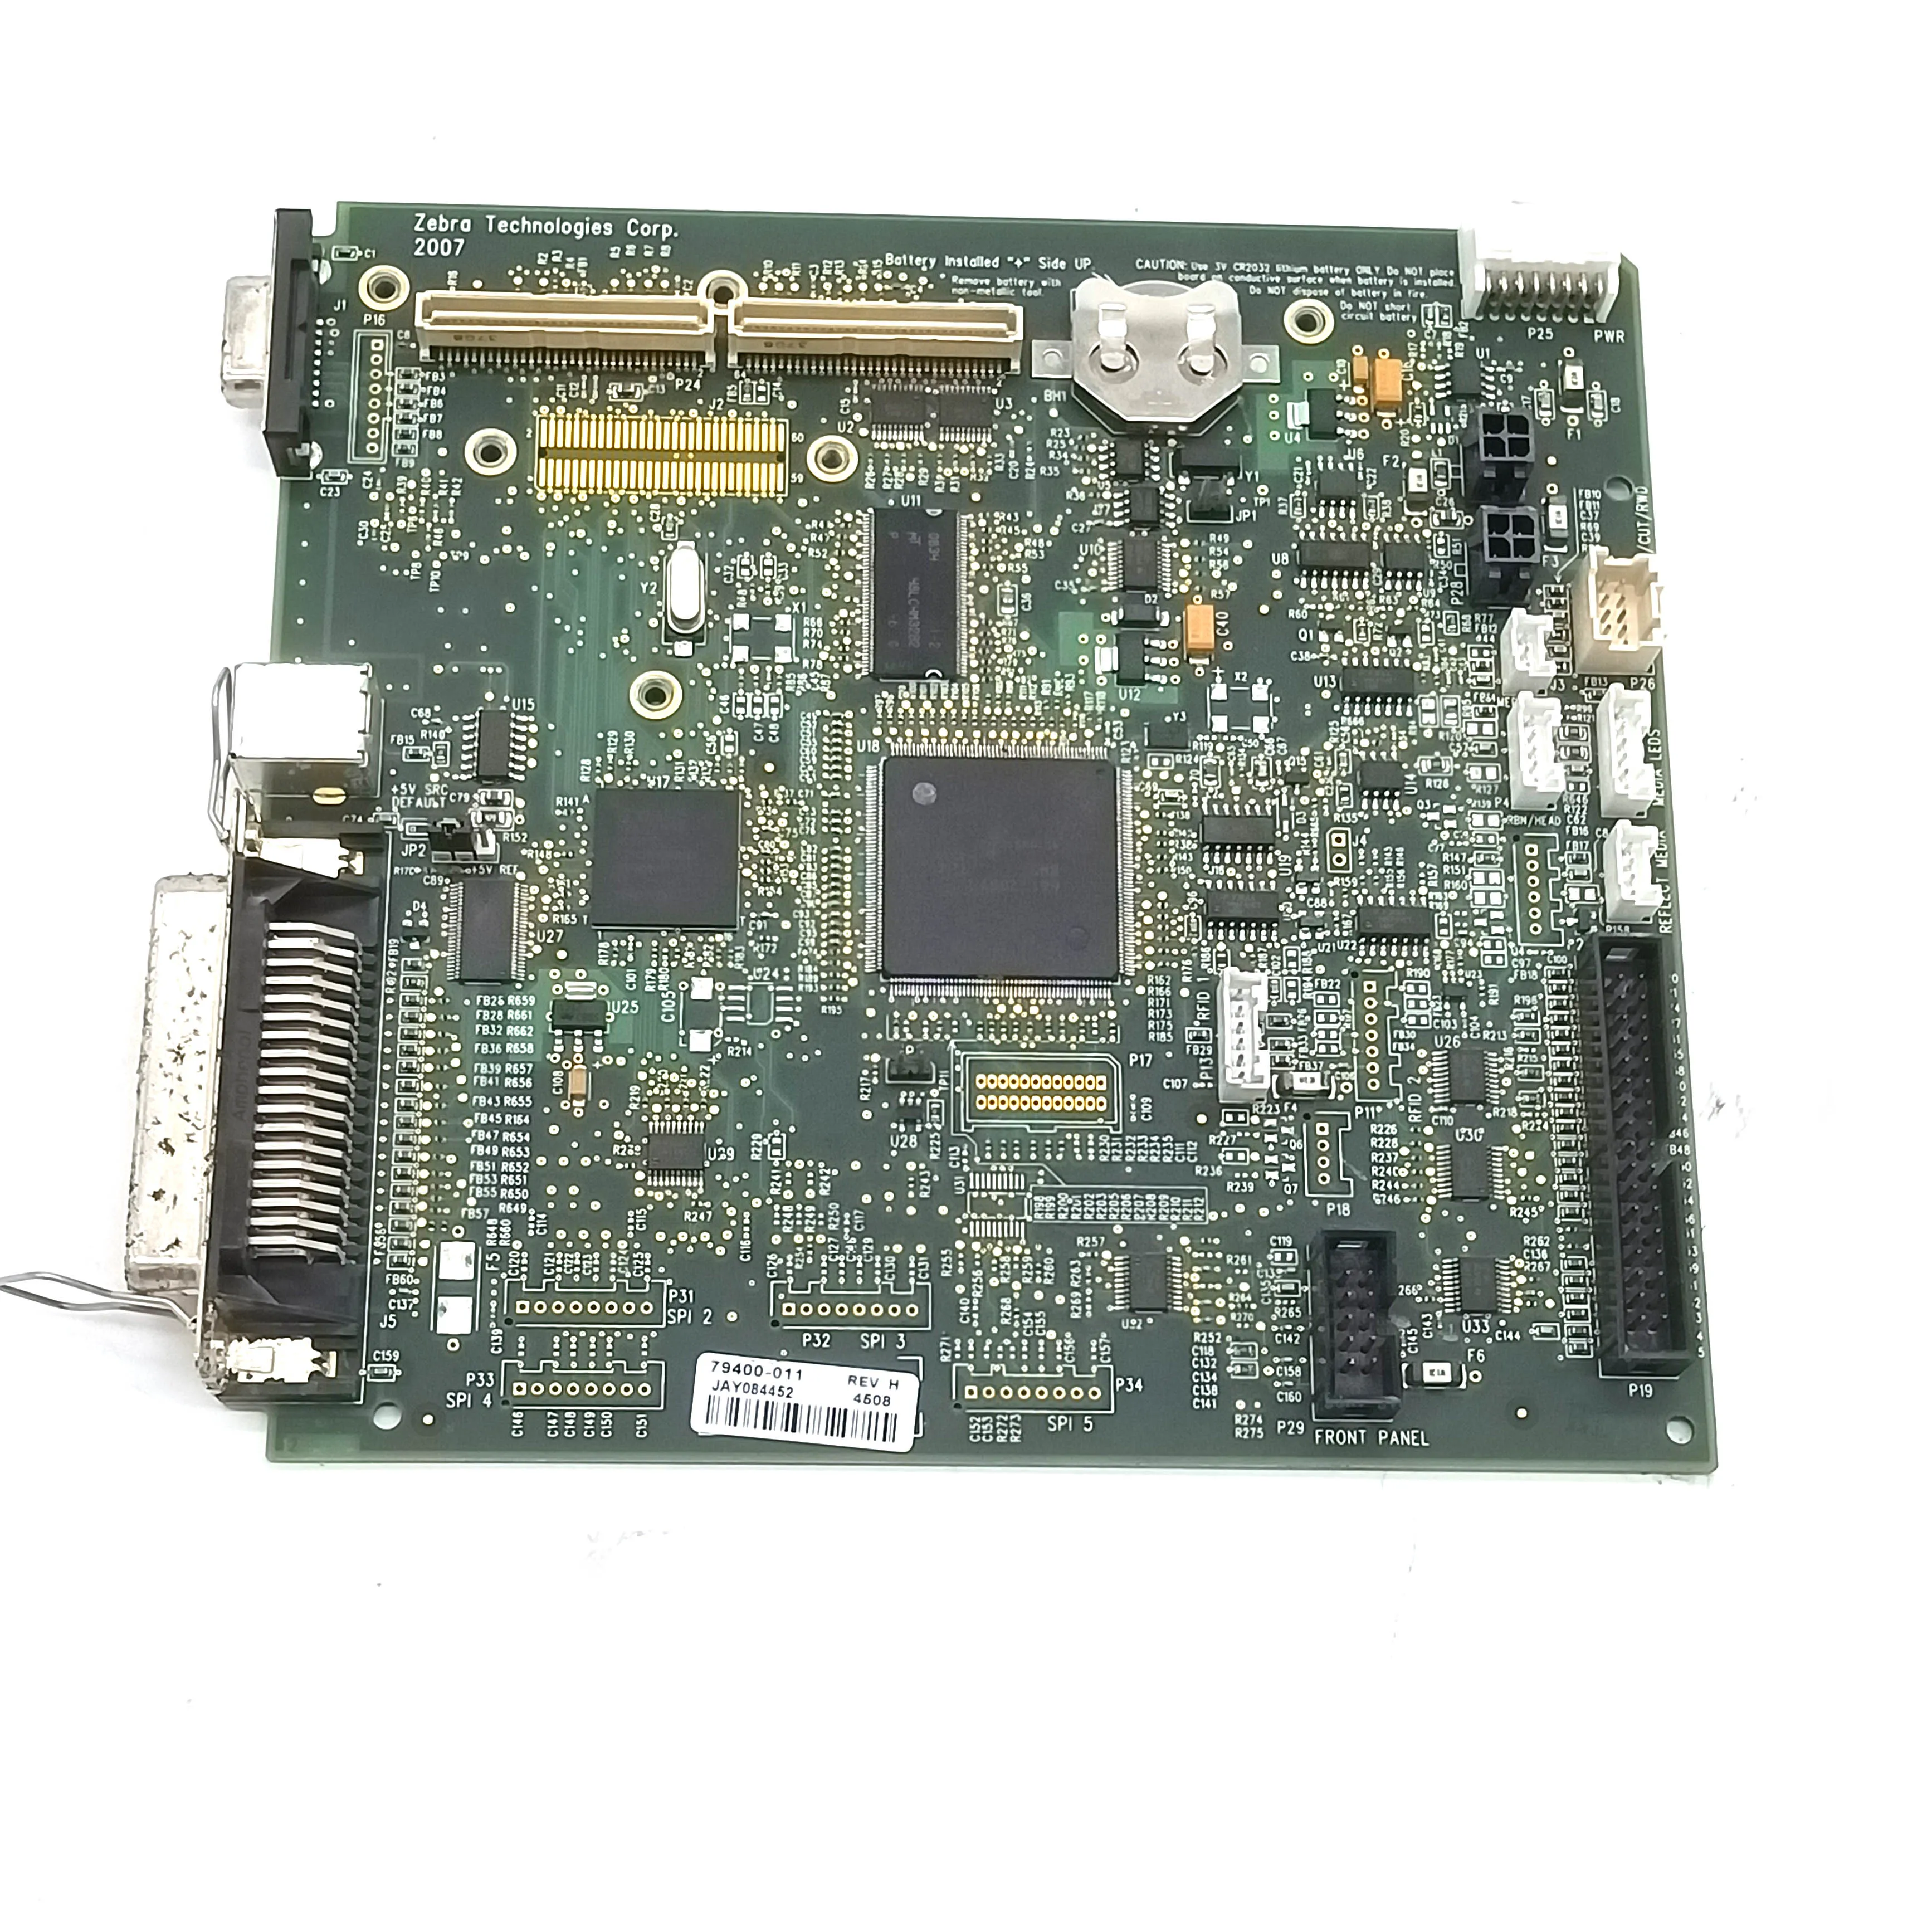 

Main board motherboard 79400-011 REV H fits for zebra ZM400